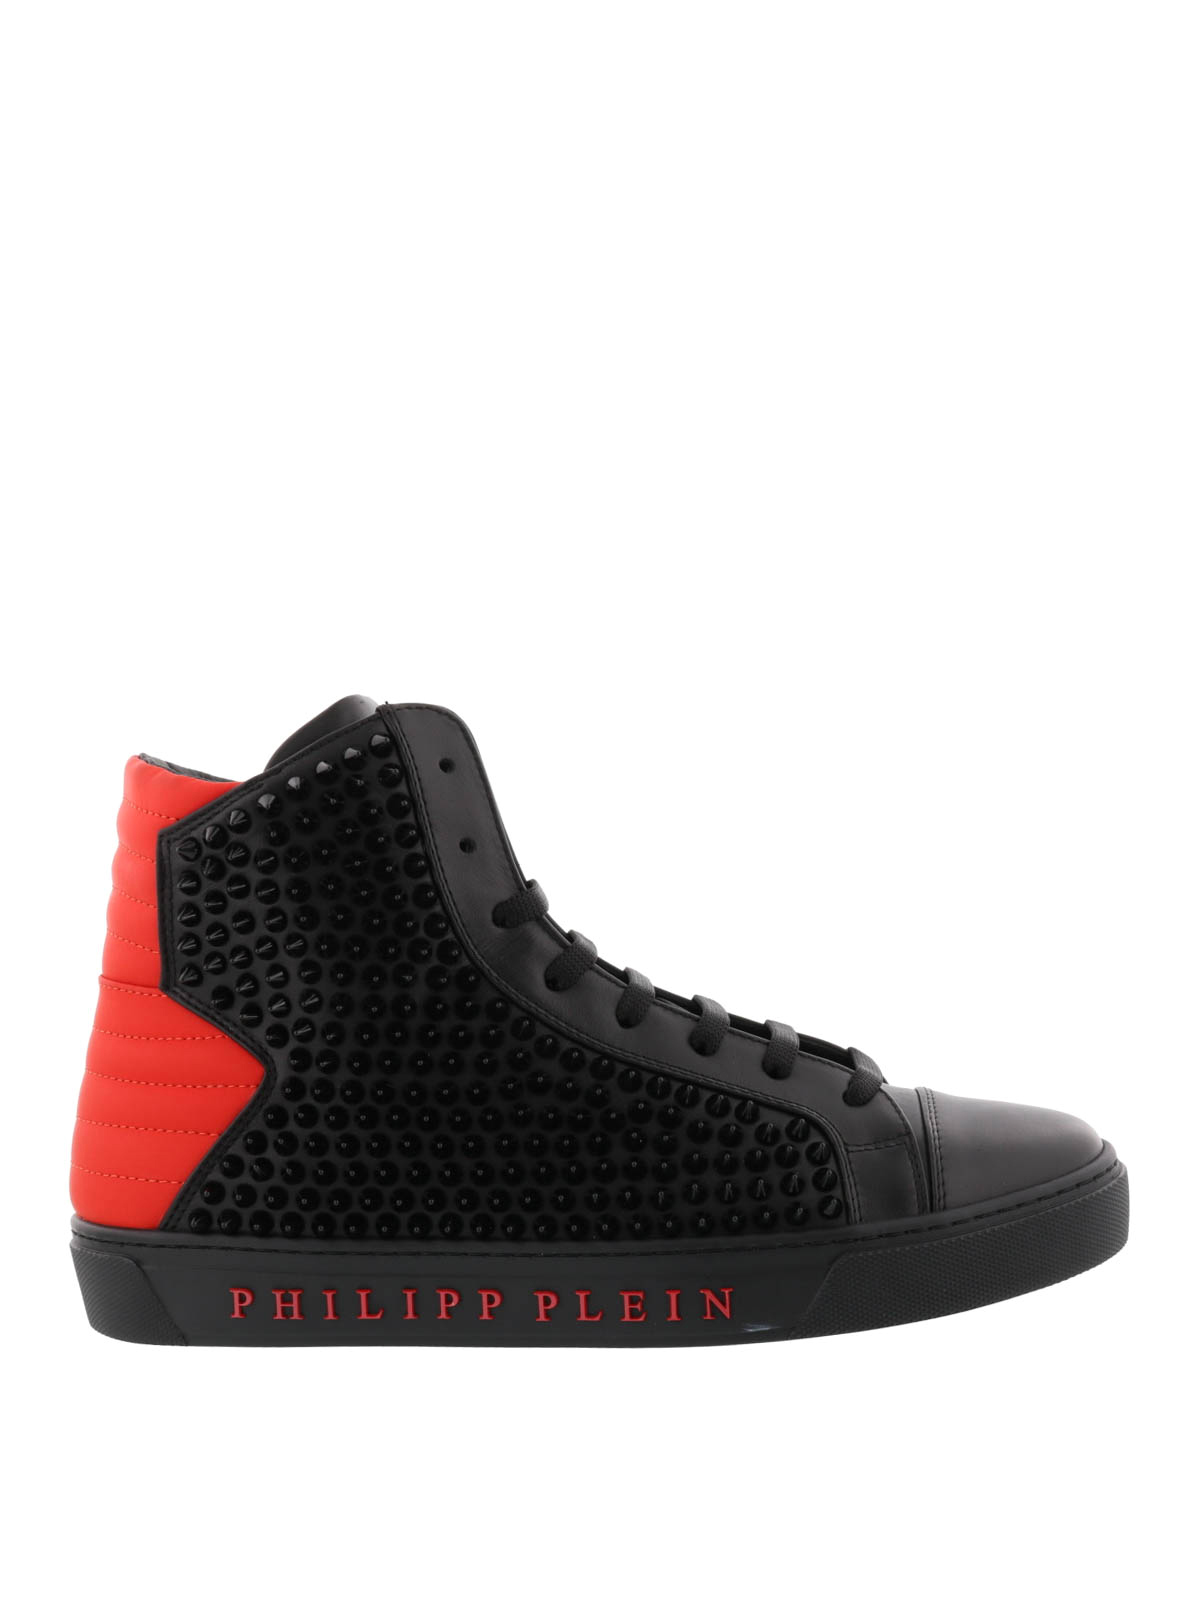 philipp plein studded shoes